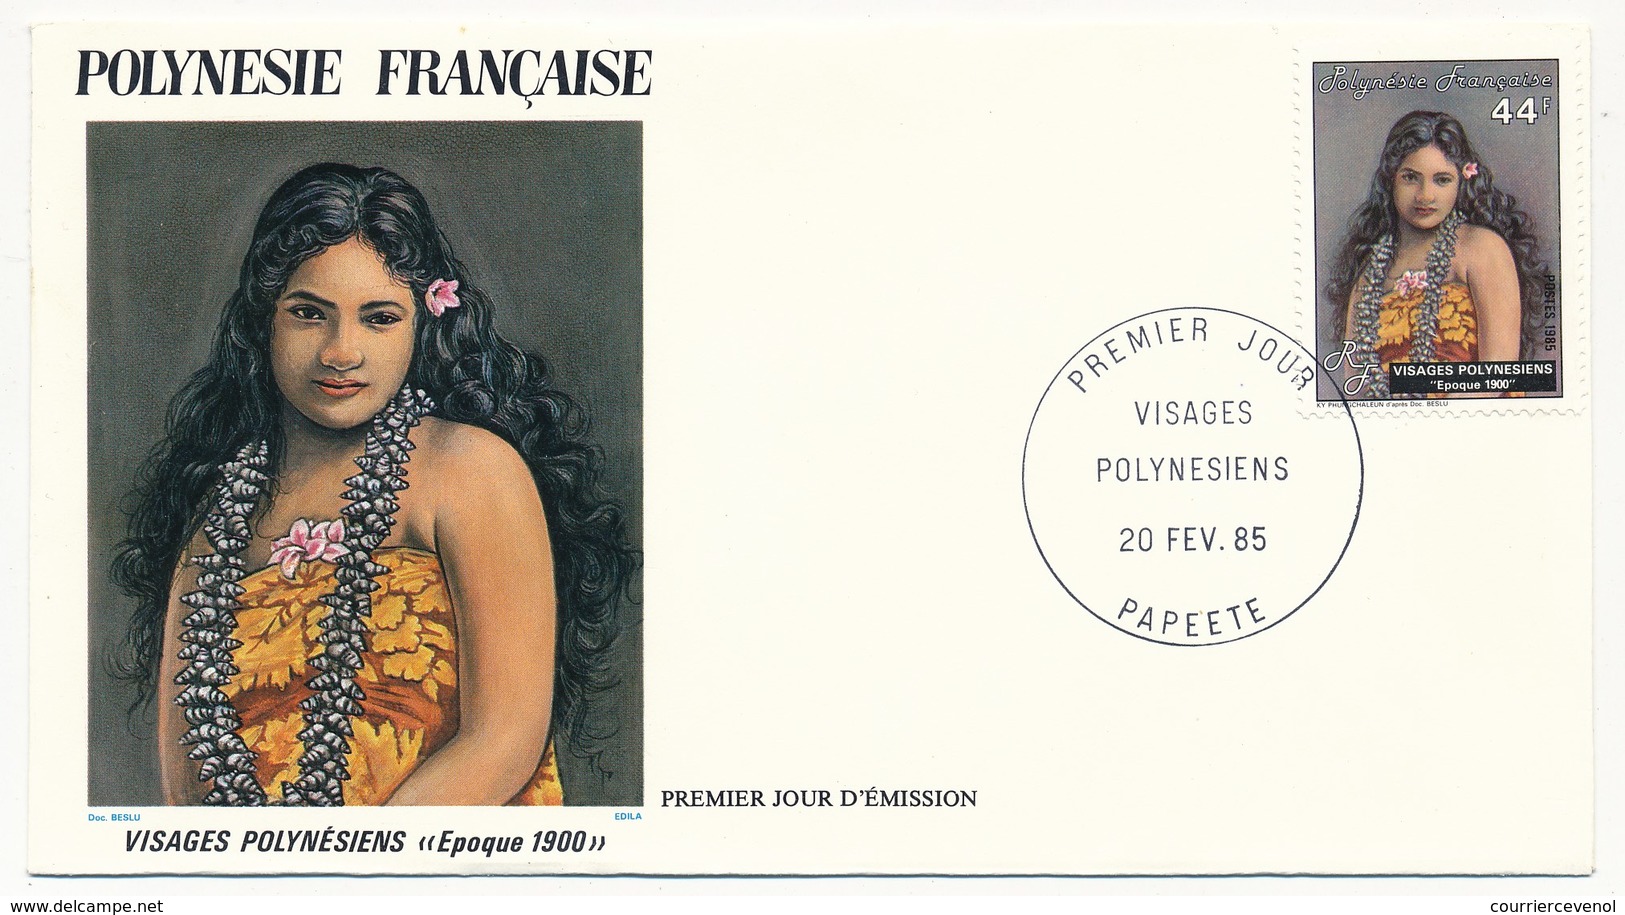 POLYNESIE FRANCAISE - 3 FDC - Visages Polynésiens - 1985 - Papeete - FDC